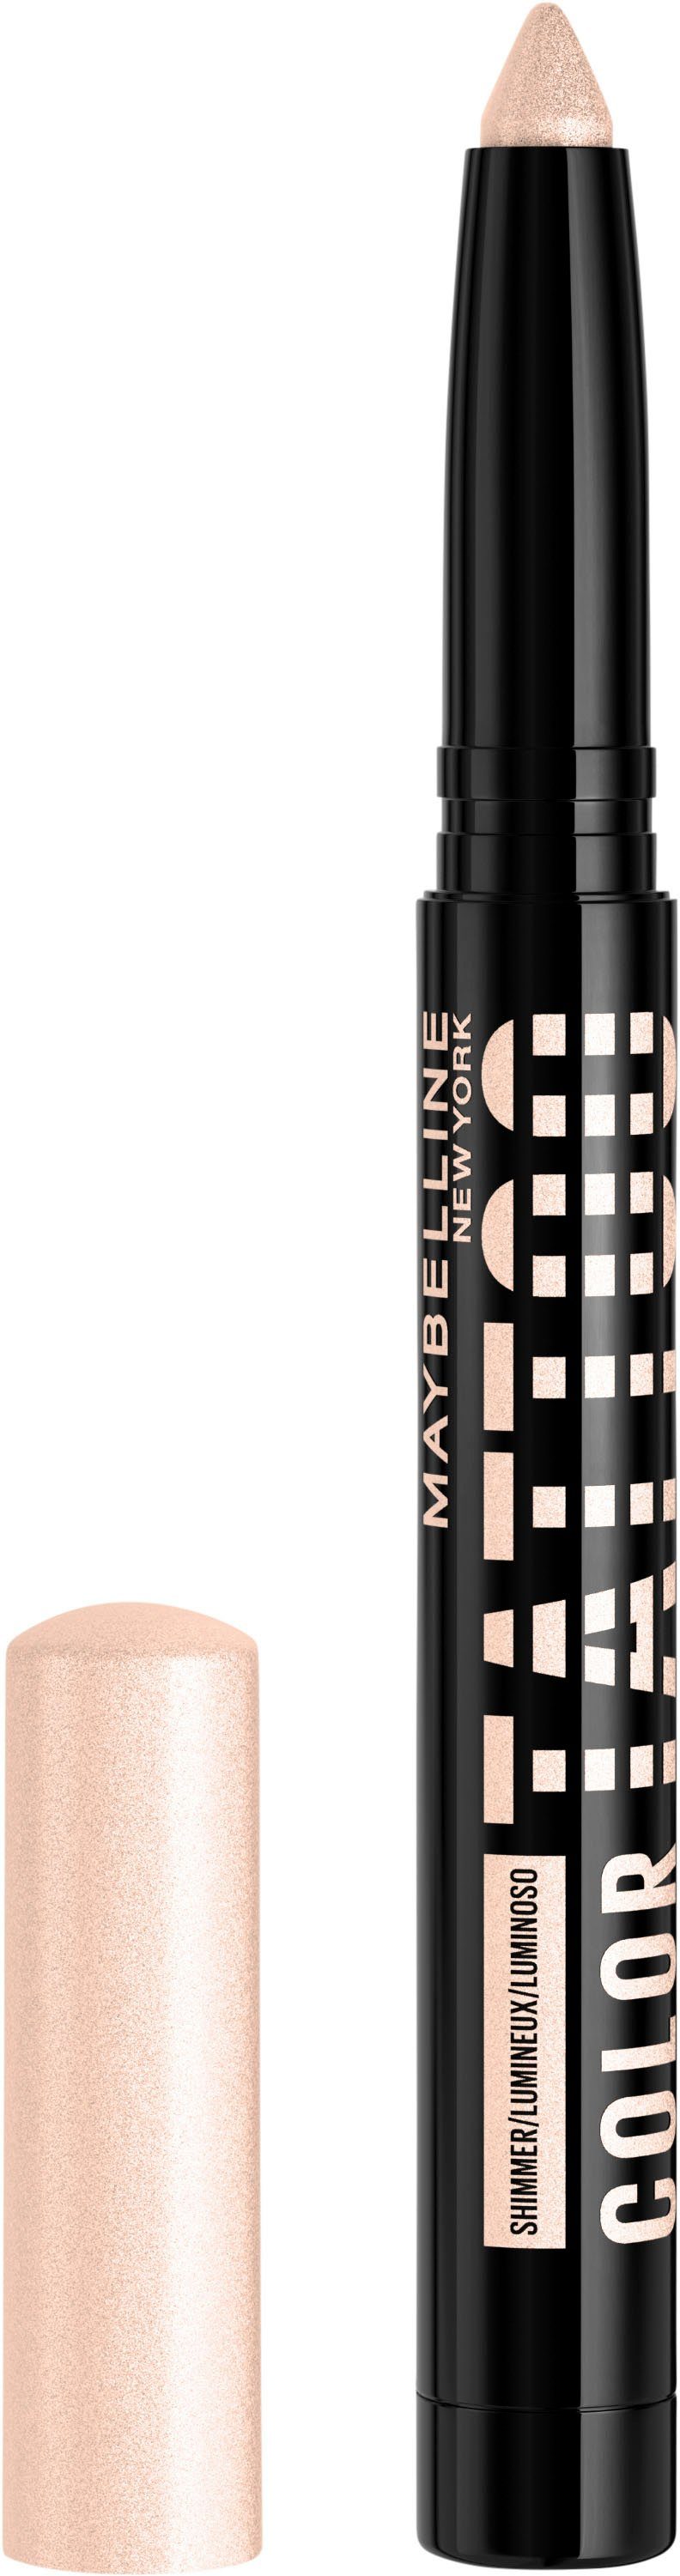 NEW Maybelline Eye Color YORK MAYBELLINE integriertem Lidschatten 24h mit Anspitzer Stix New York Tattoo Shining, All-in-one-Eyeliner